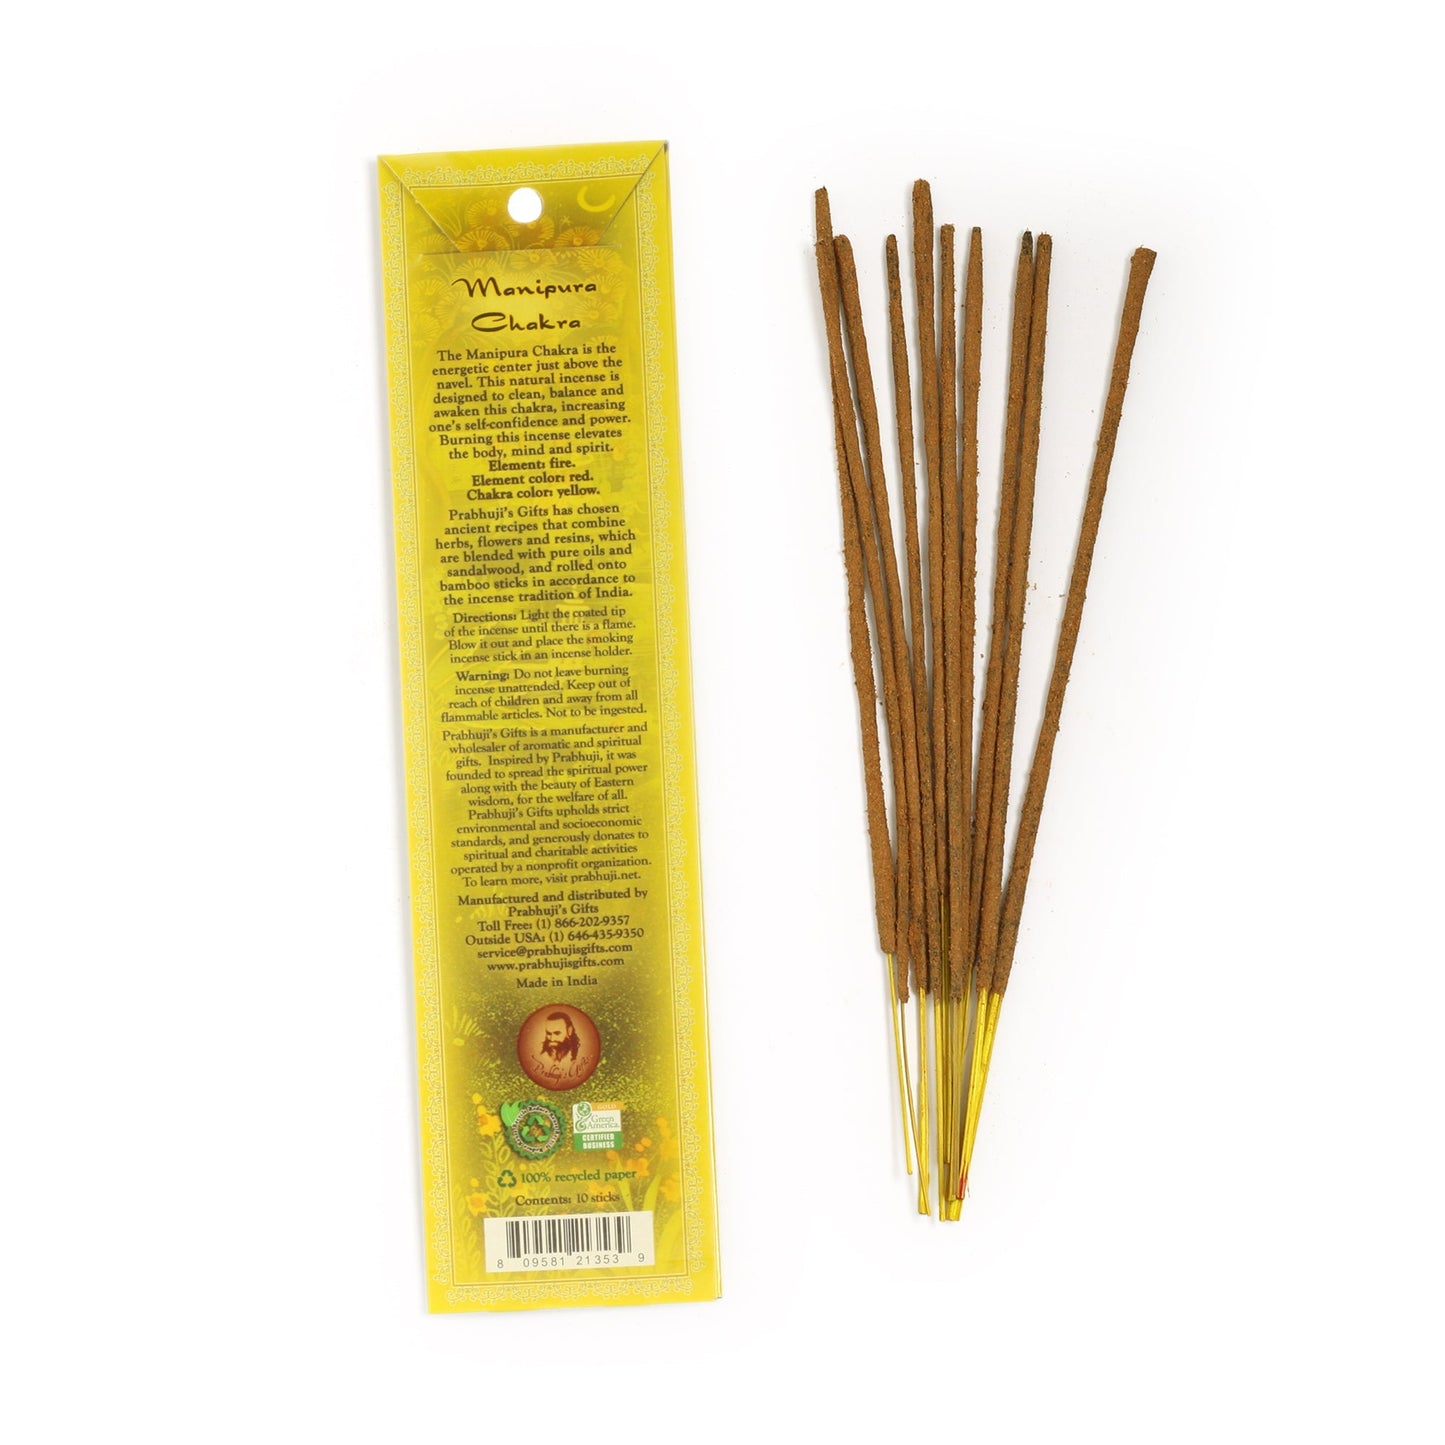 Incense Sticks Solar Plexus Chakra Manipura - Power and Self-confidence - Tree Spirit Wellness